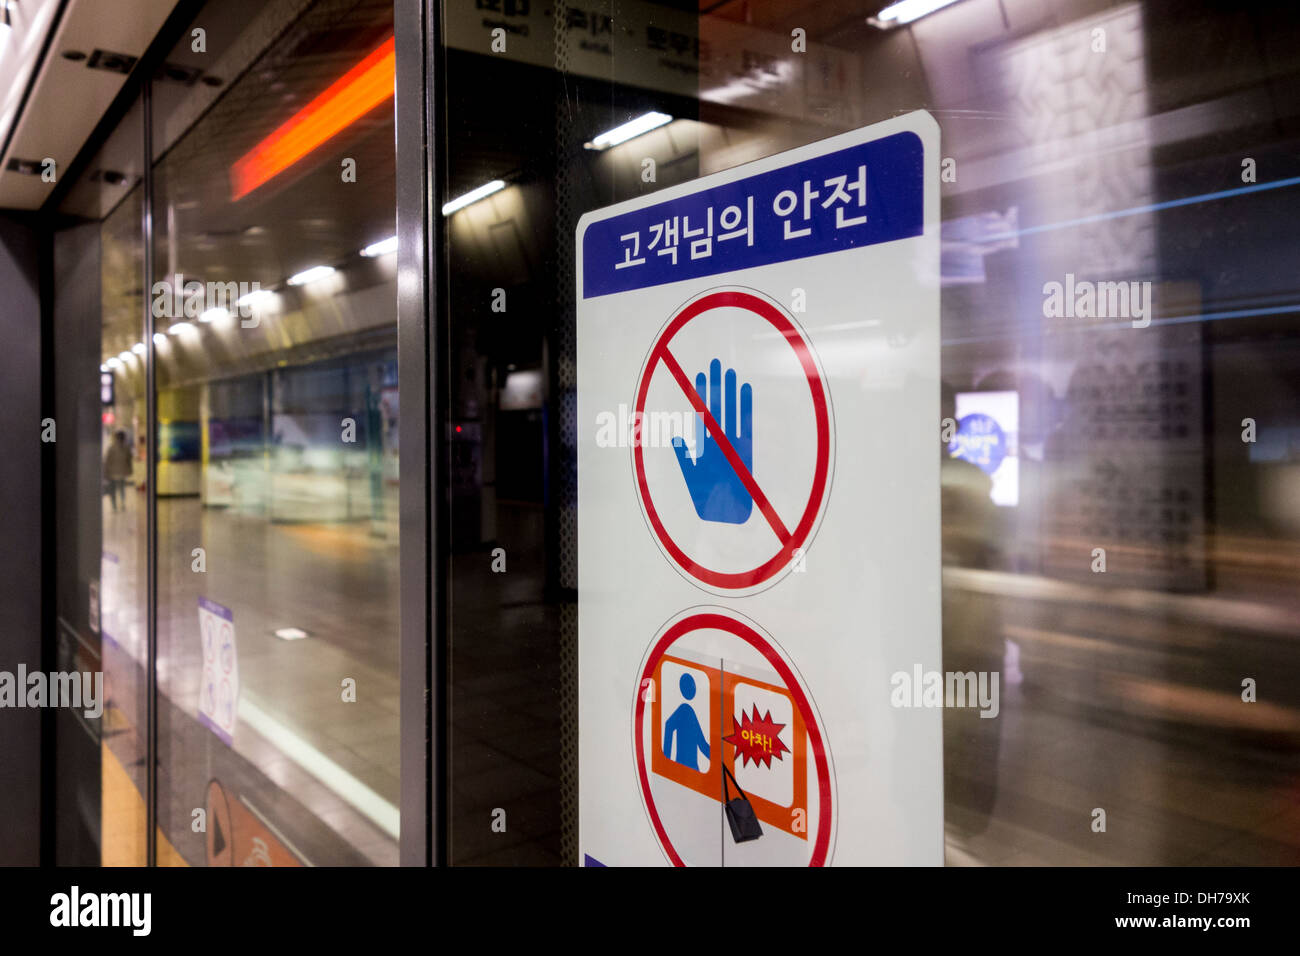 Safety warning sign on subway platform screen in Seoul, Korea Stock Photo